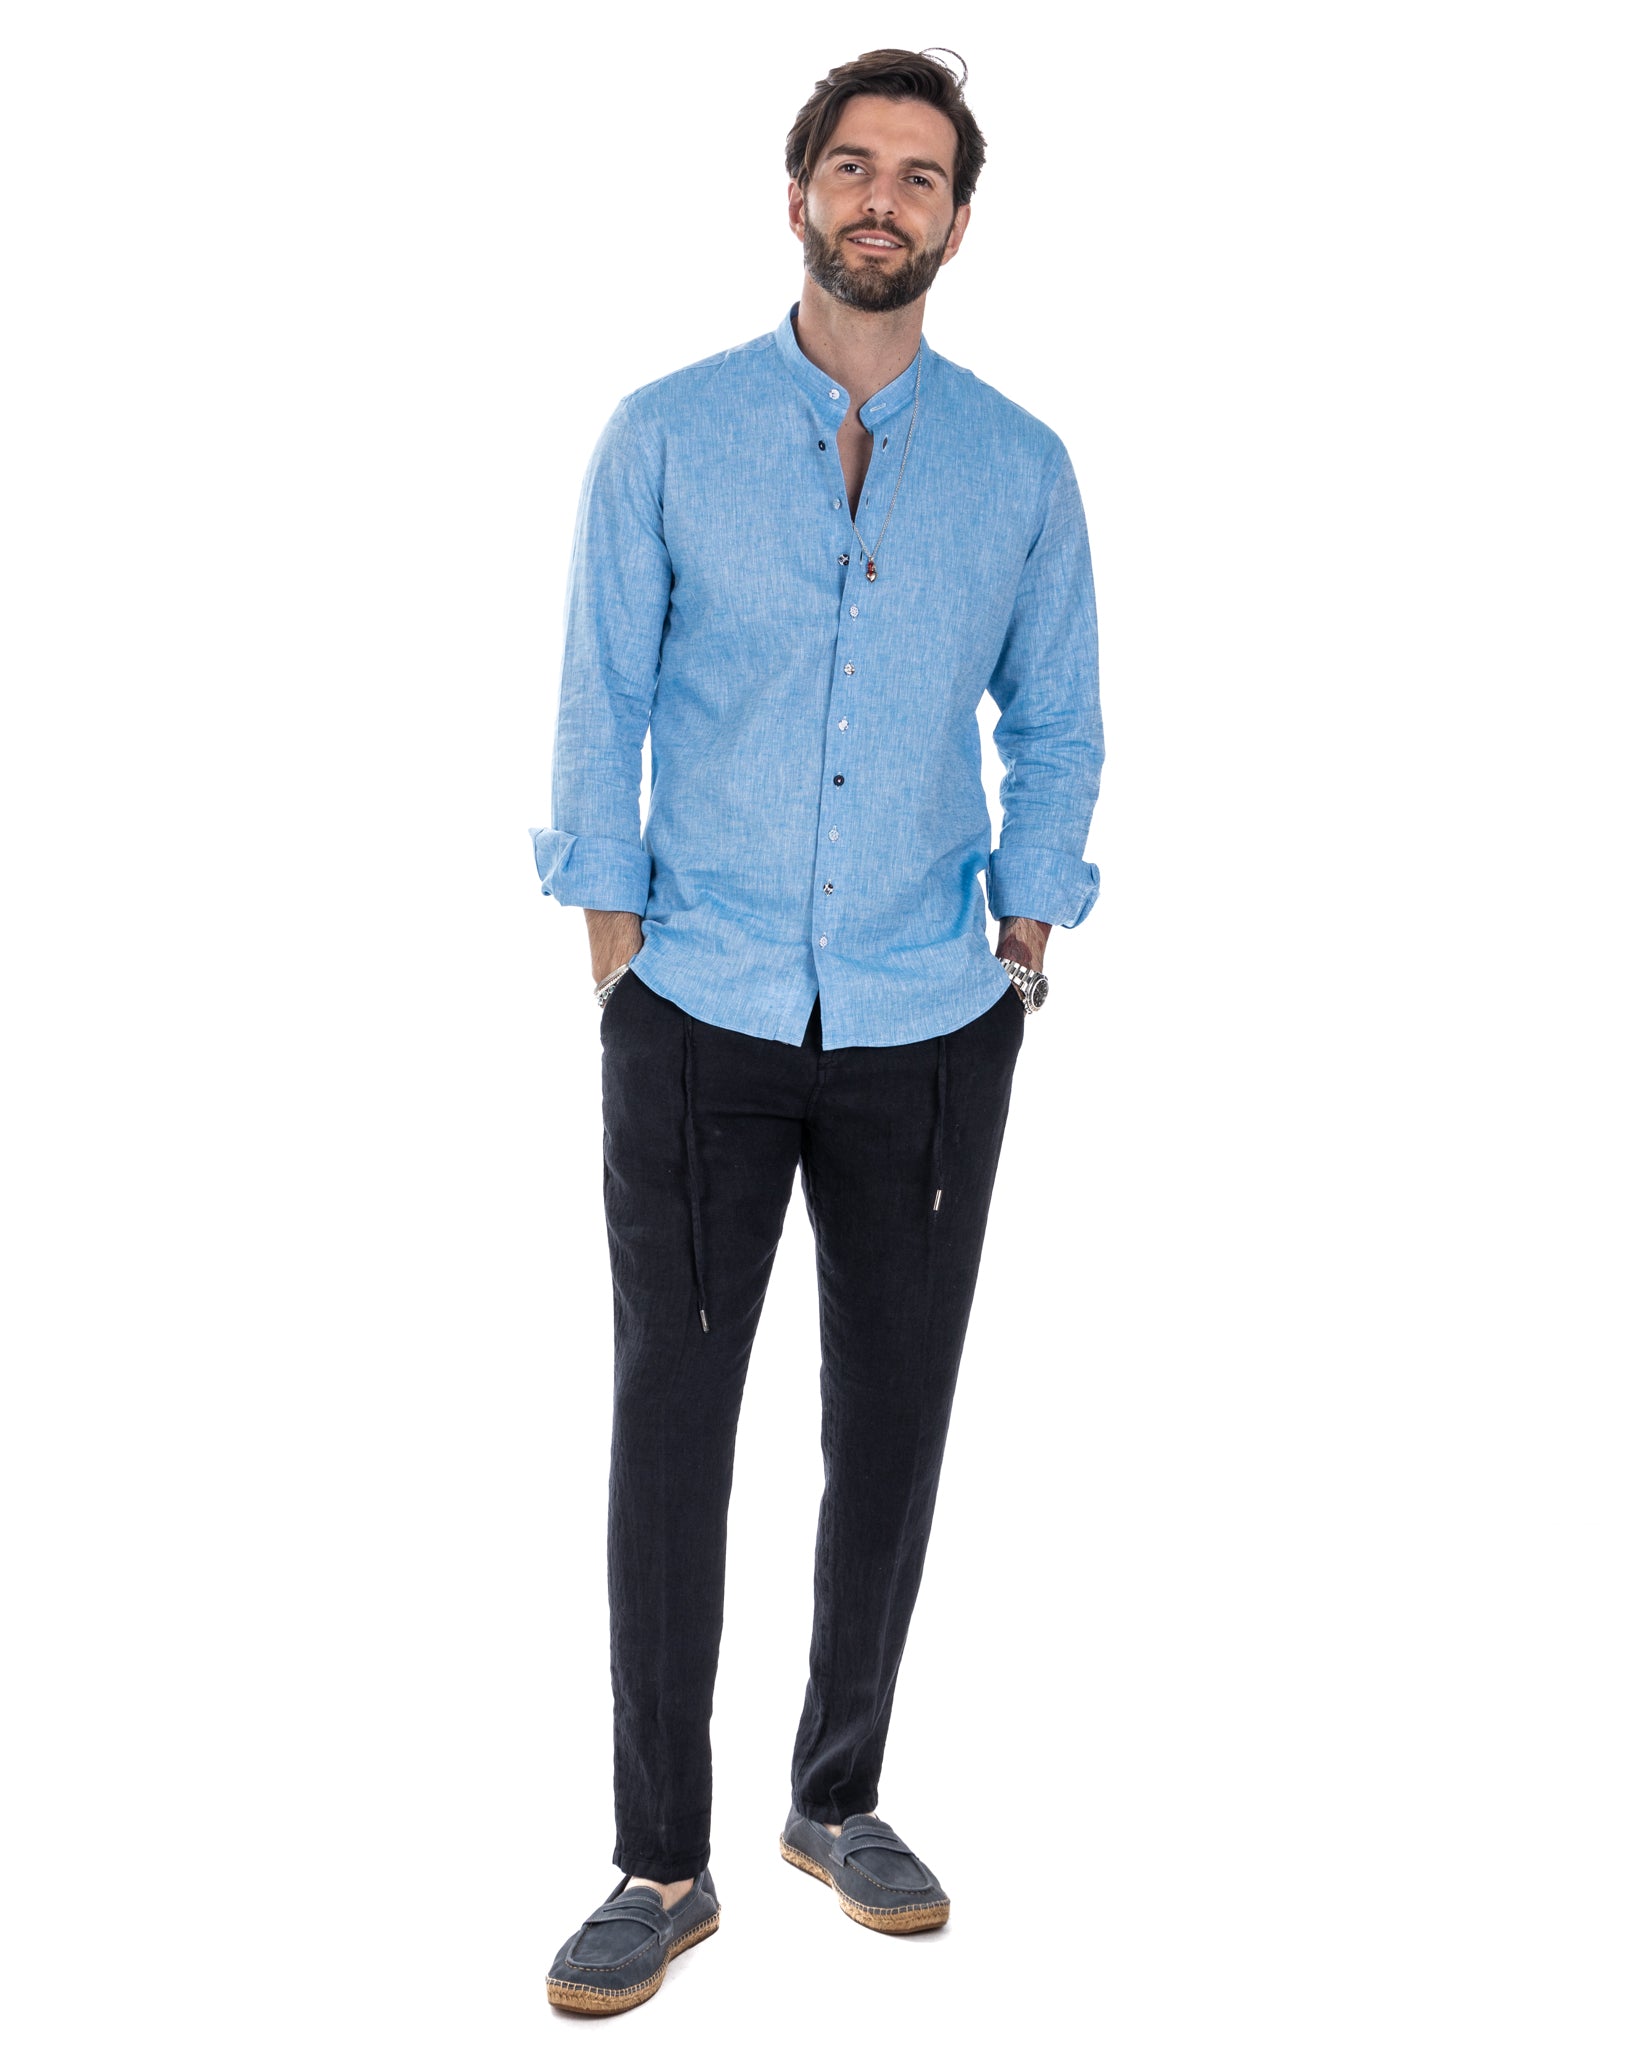 Gustave - pantalon bleu pur lin